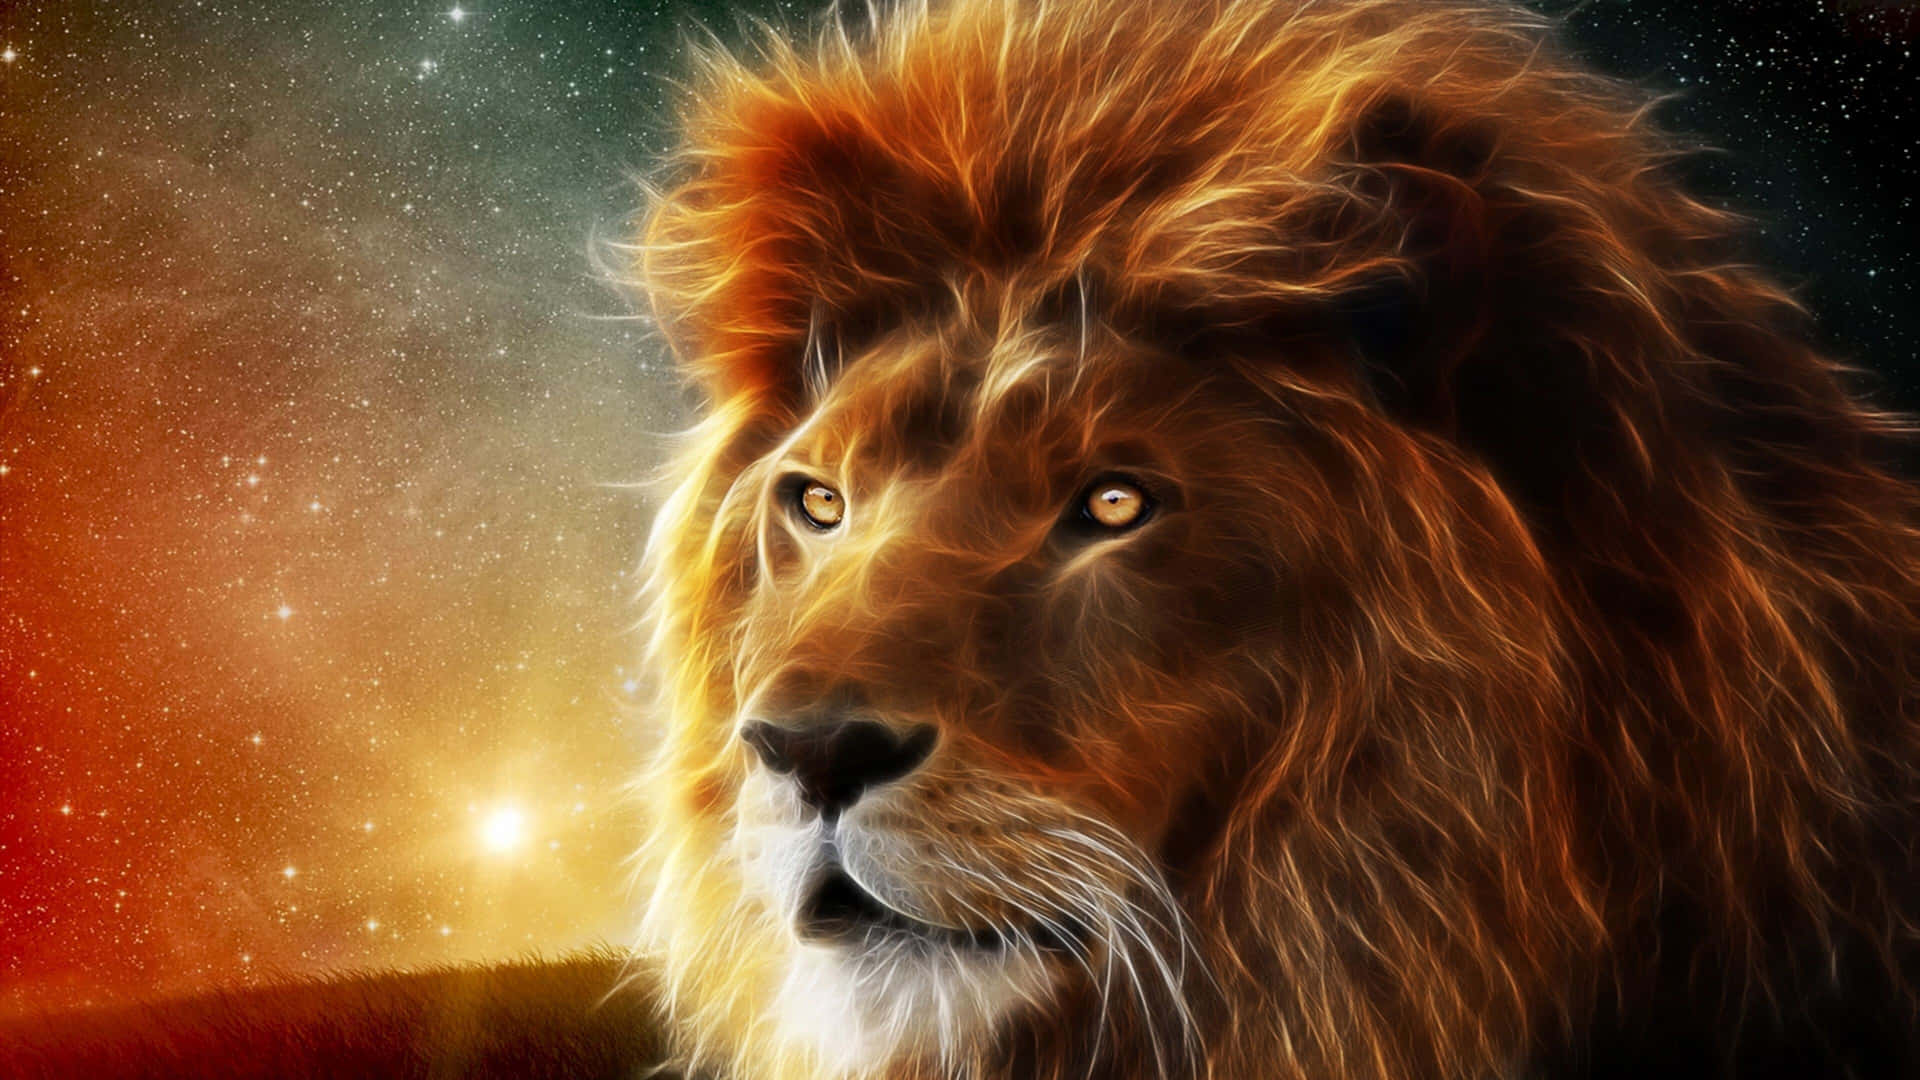 Majestic 3D Rendered Lion in a Wild Landscape Wallpaper